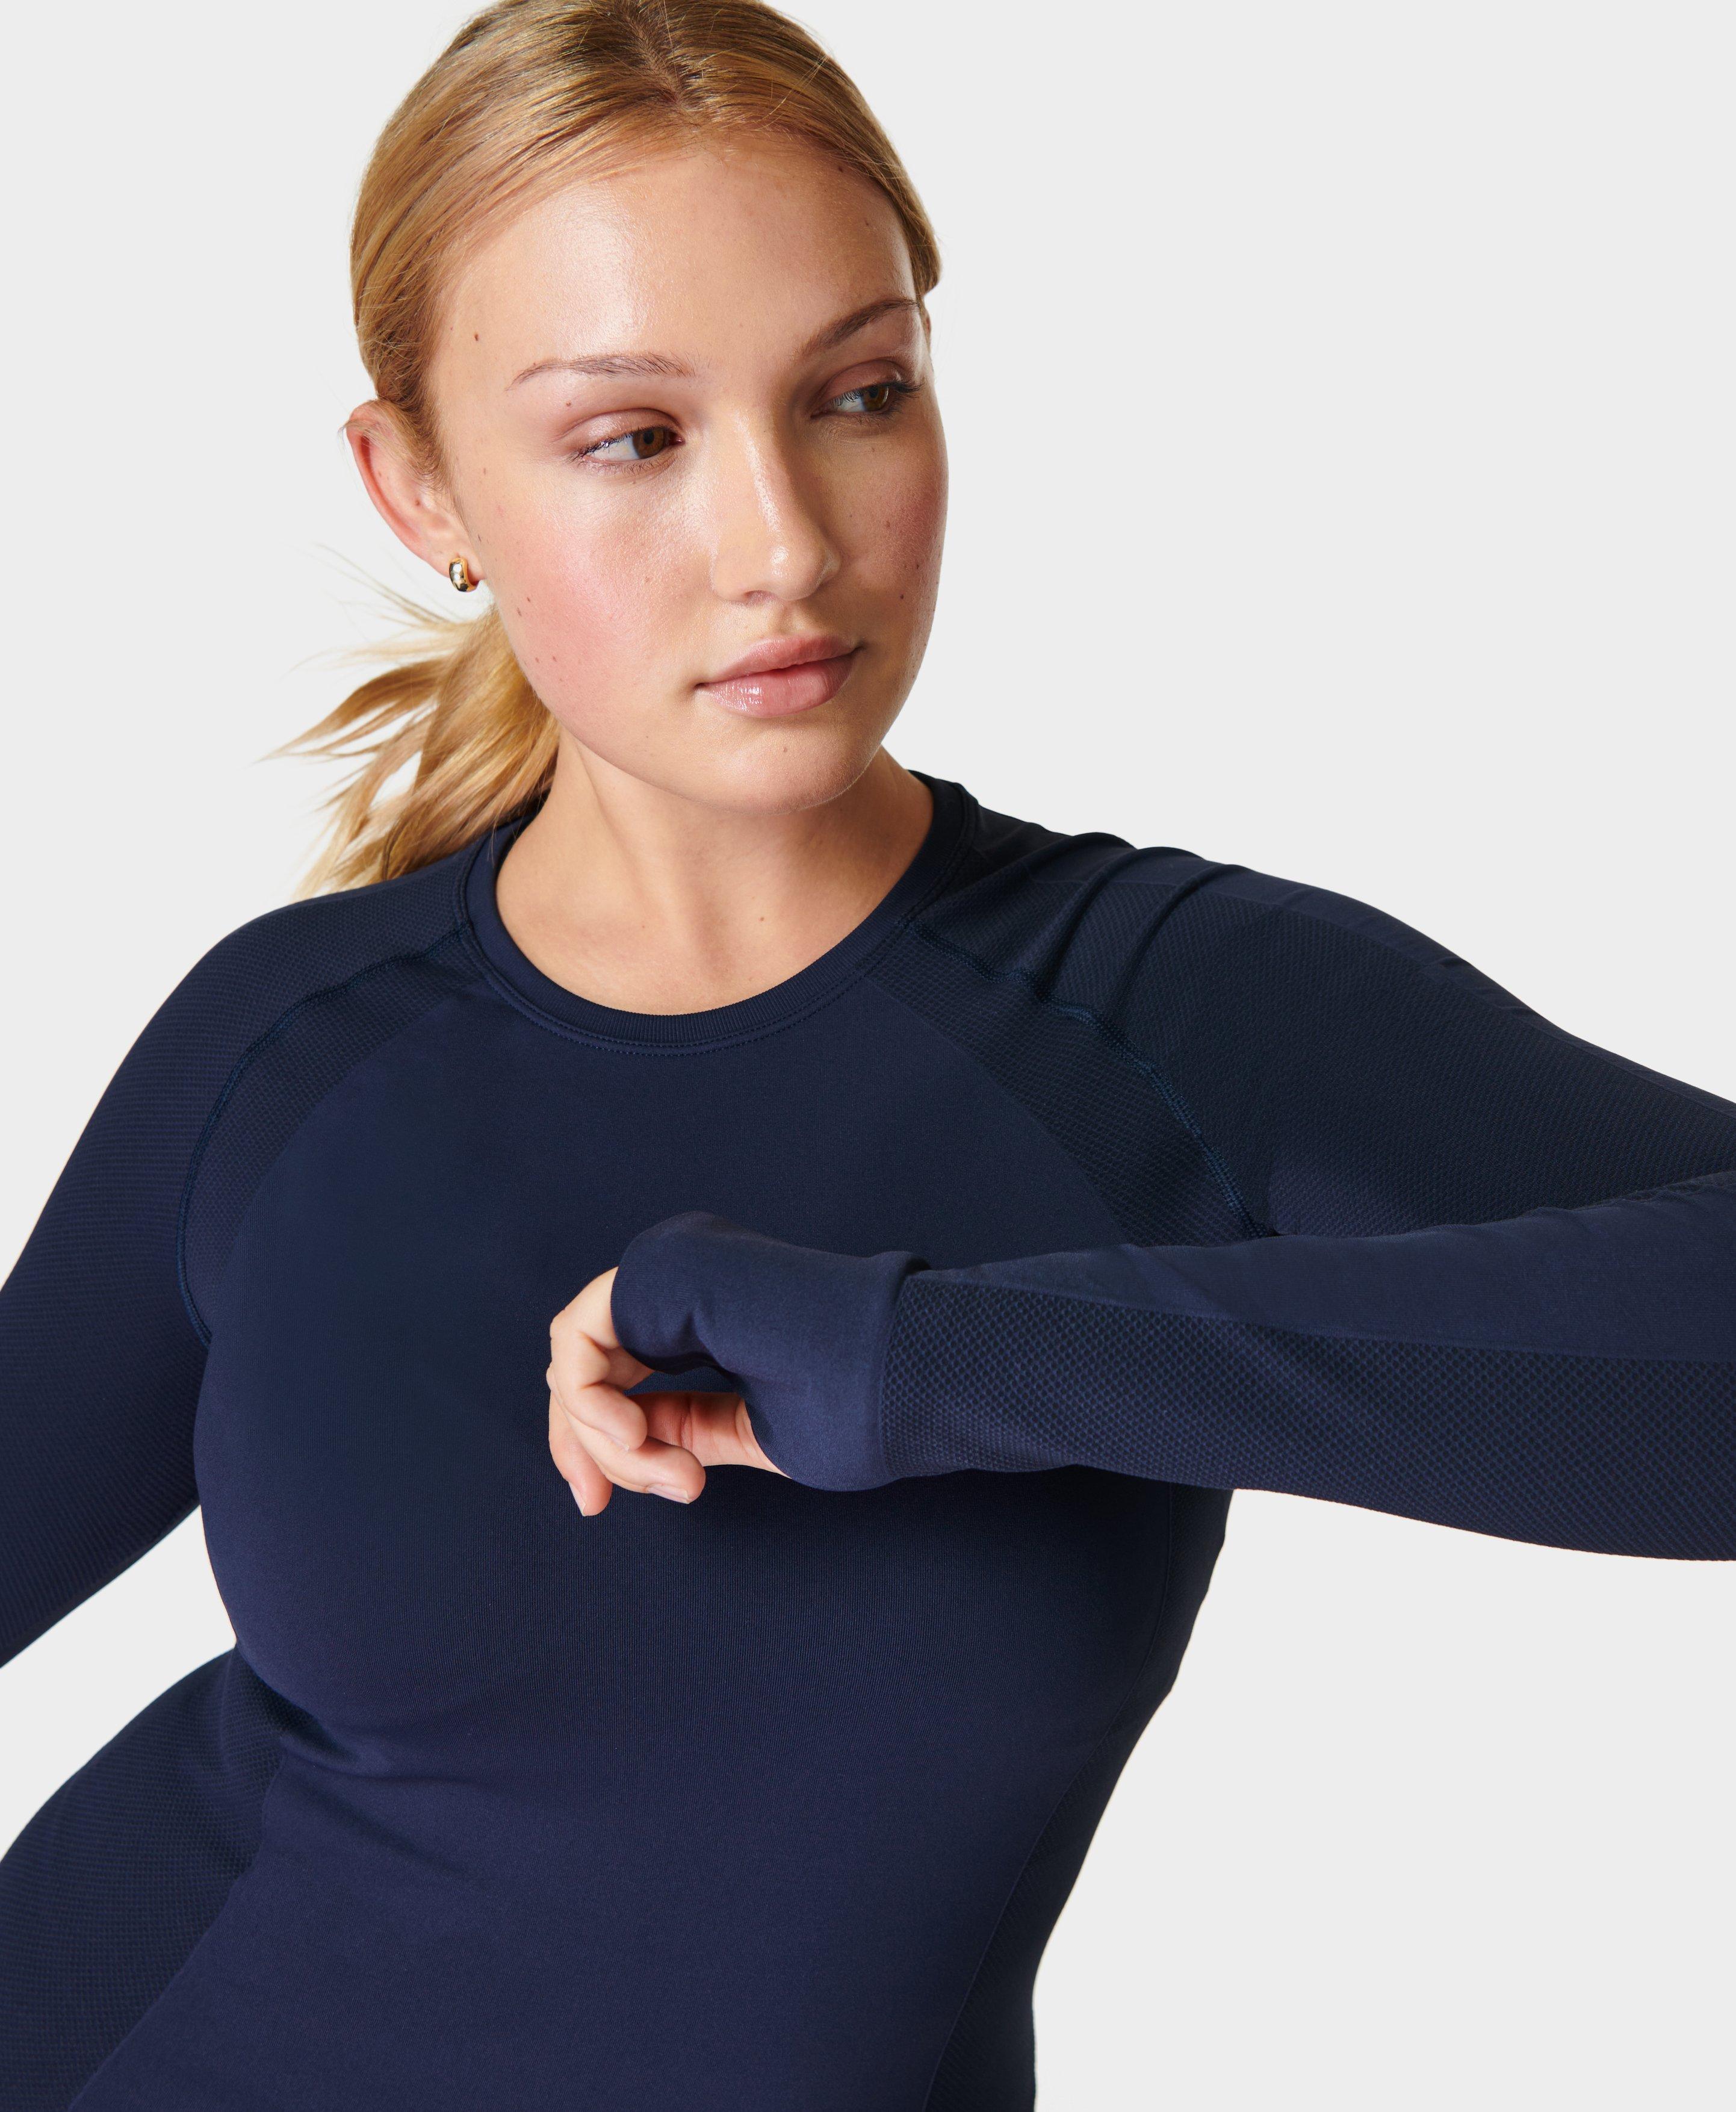 adviicd Long Sleeve Workout Tops For Women Women's Puff Sleeve